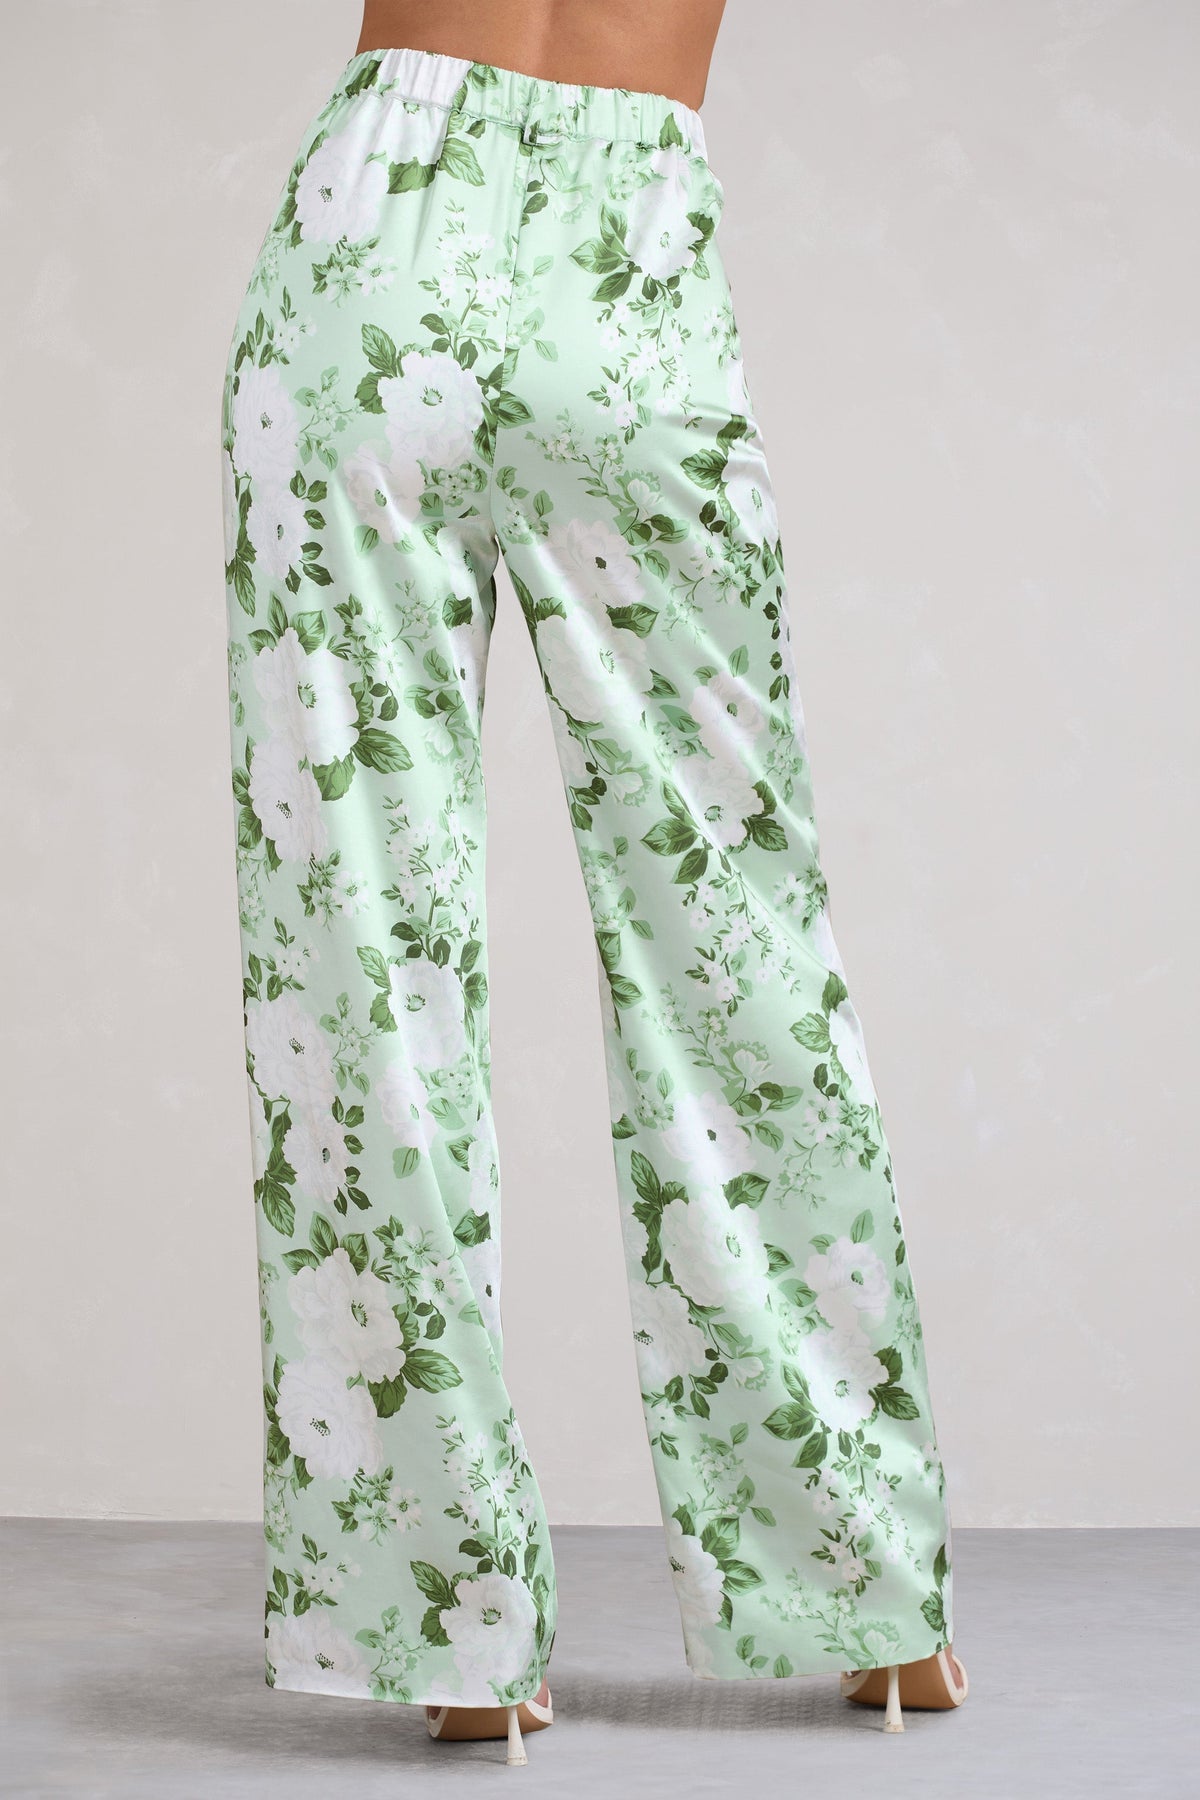 Green Floral Satin Pants - Floral Print Pants - Wide-Leg Pants - Lulus